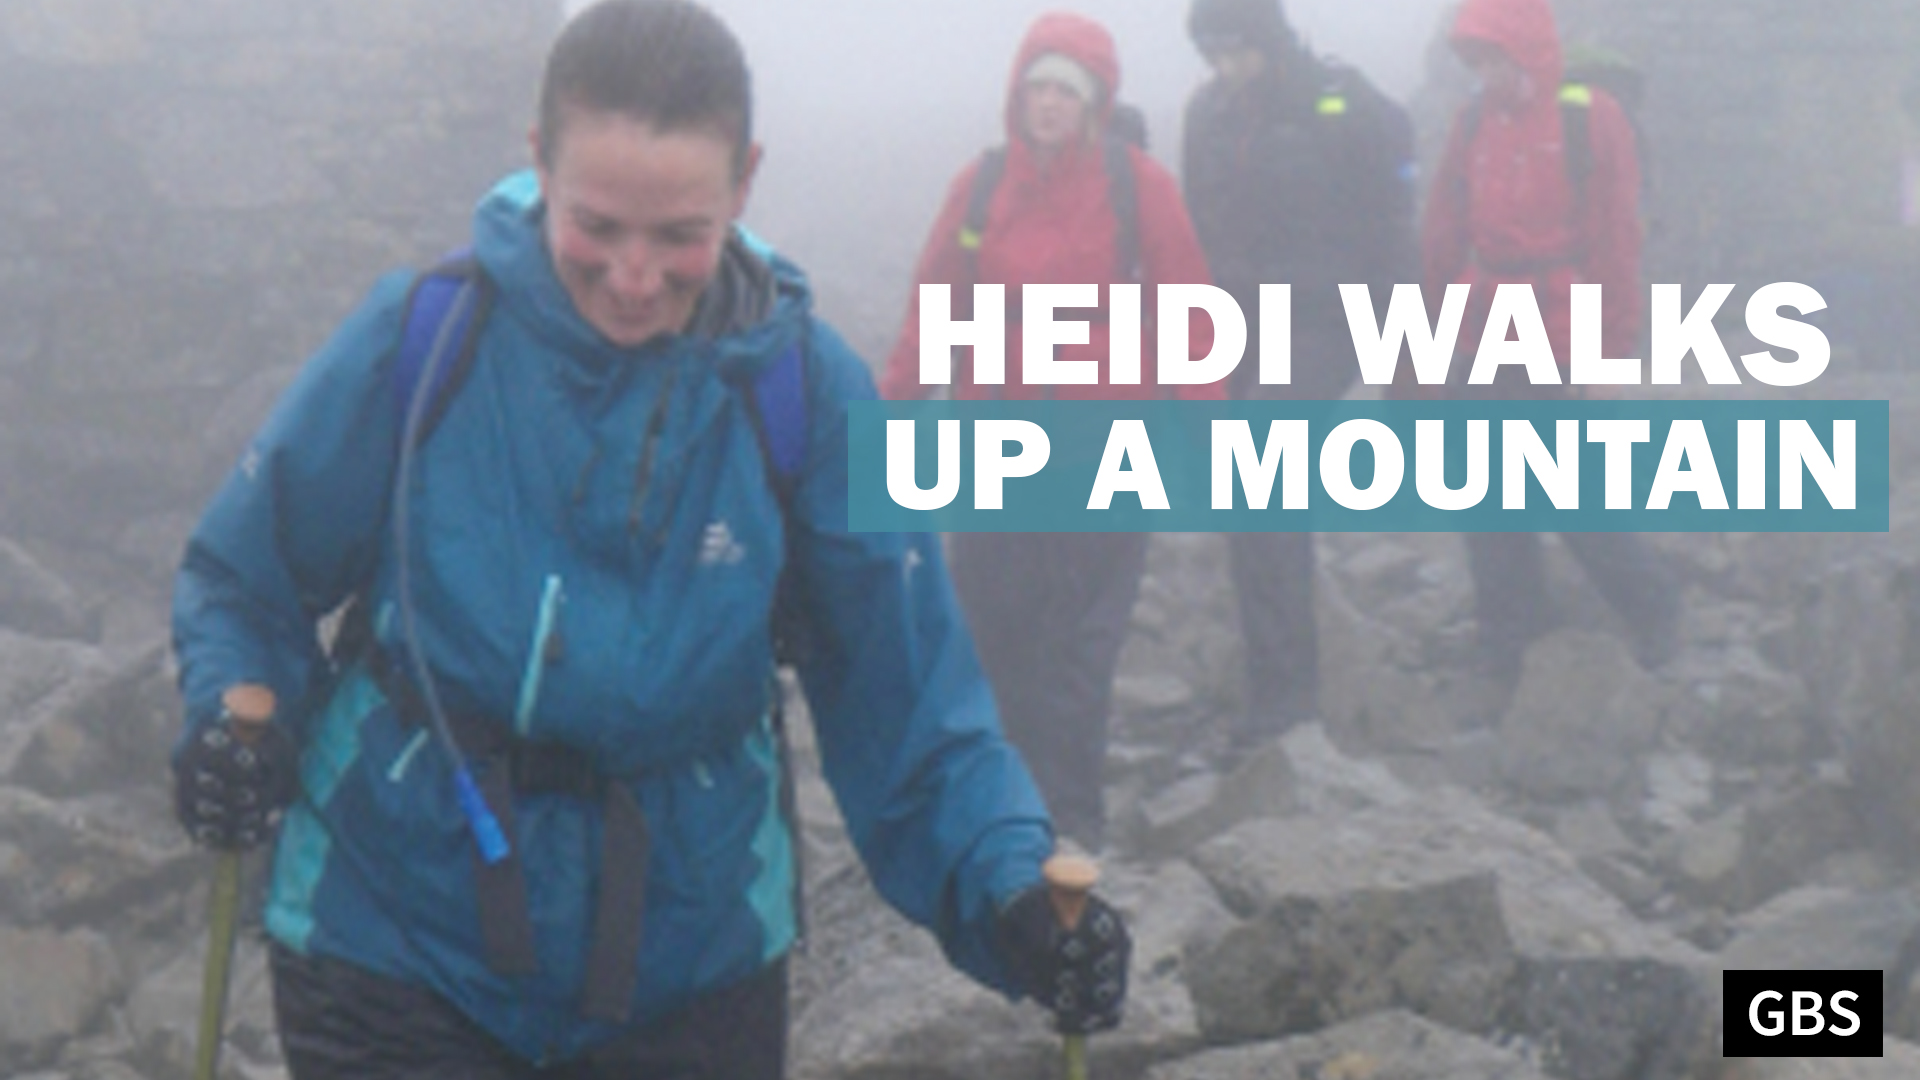 Heidi walks up a mountain